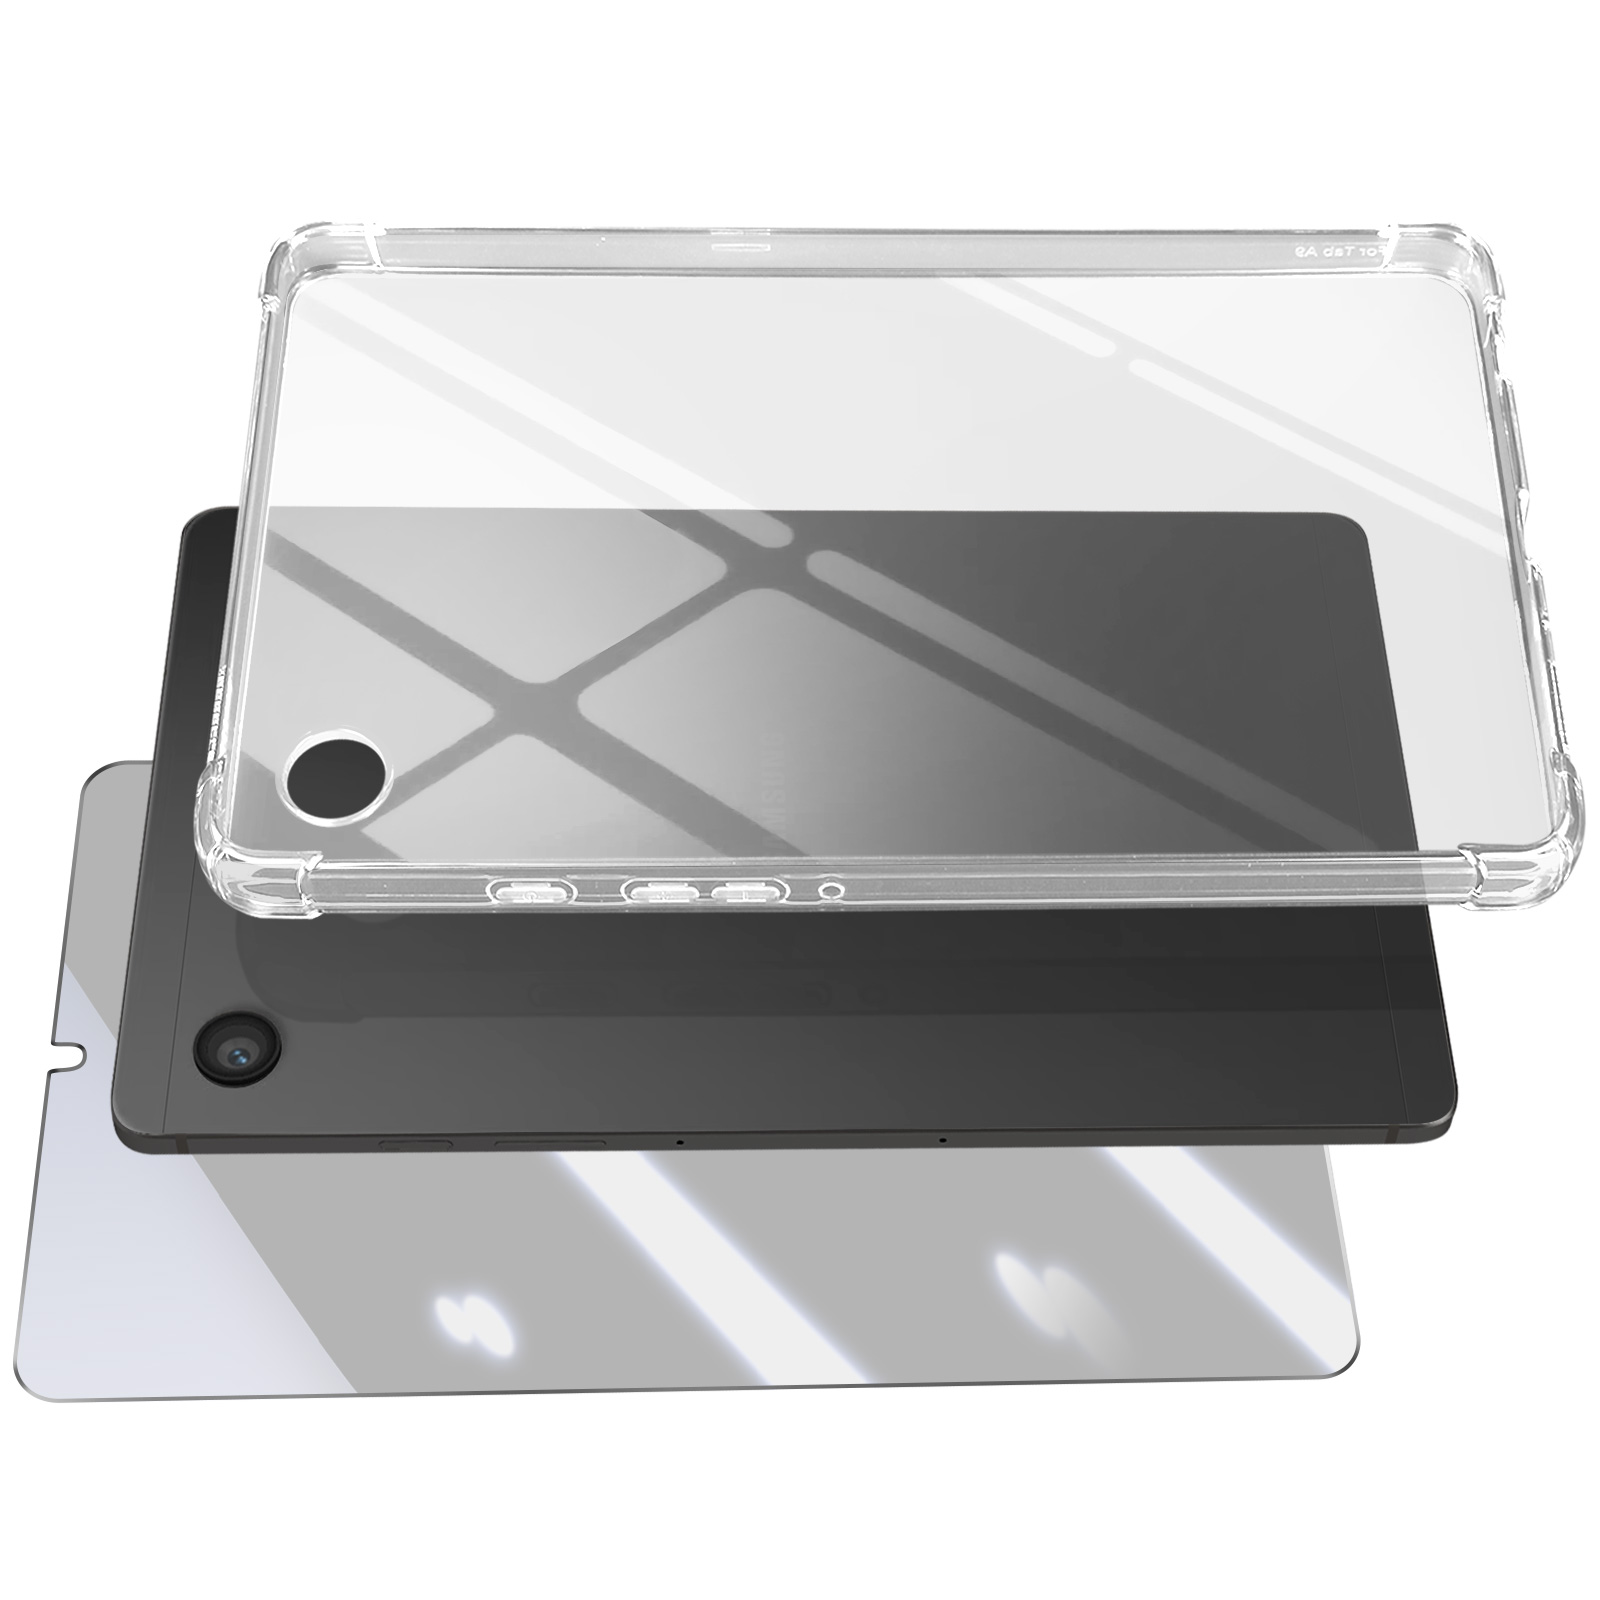 Accessoires pour Samsung Galaxy Tab A9 Plus